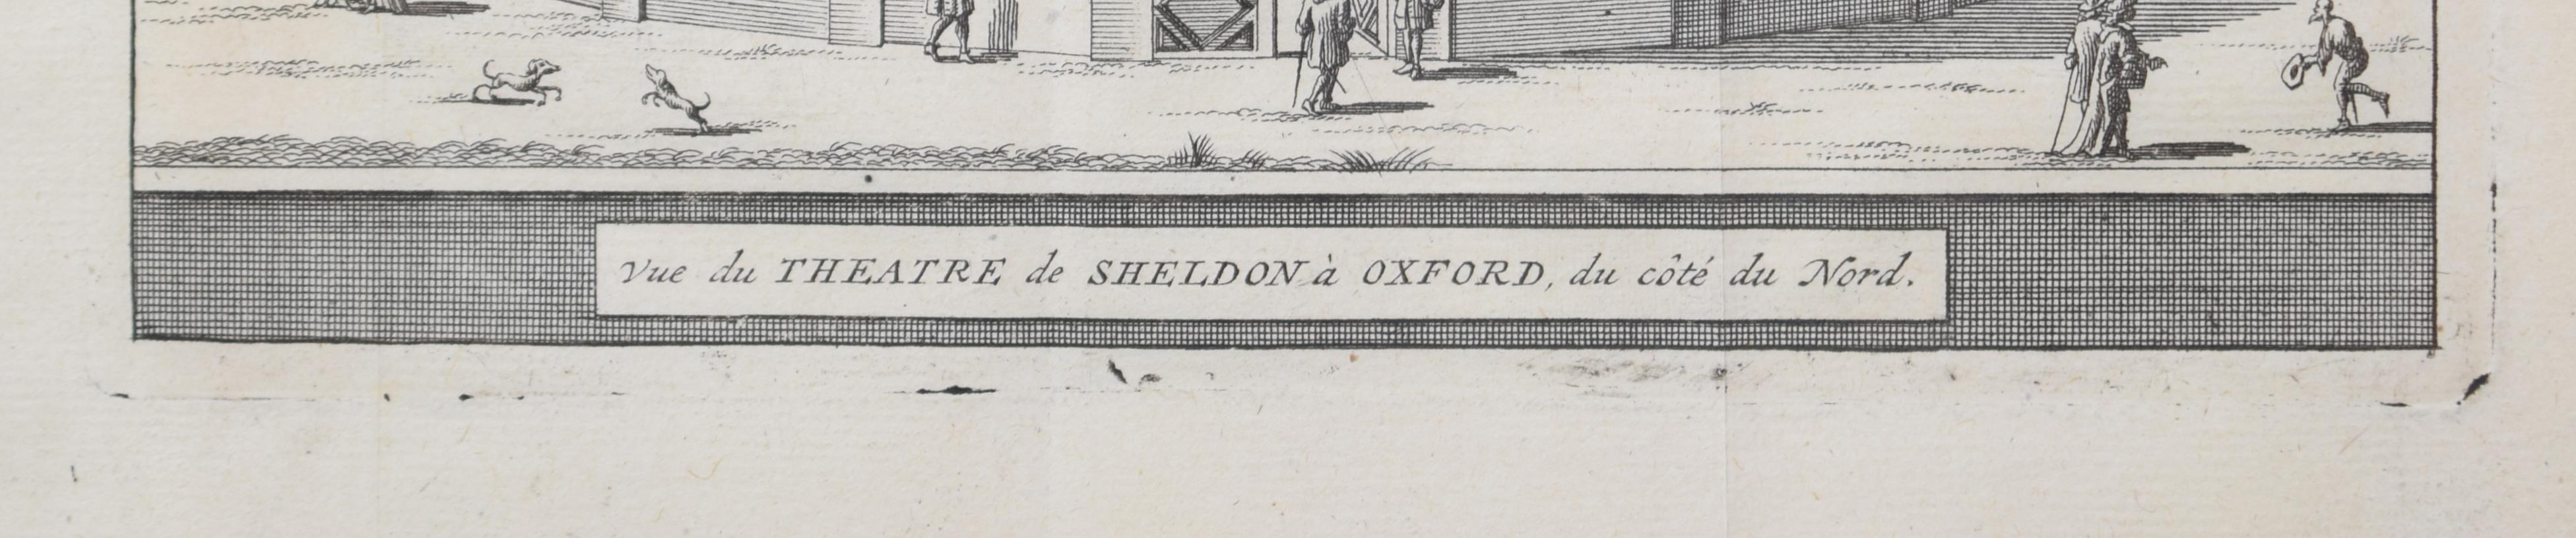 The Sheldonian, Oxford University by Pieter van der Aa after David Loggan - Realist Print by Pieter Van Der Aa